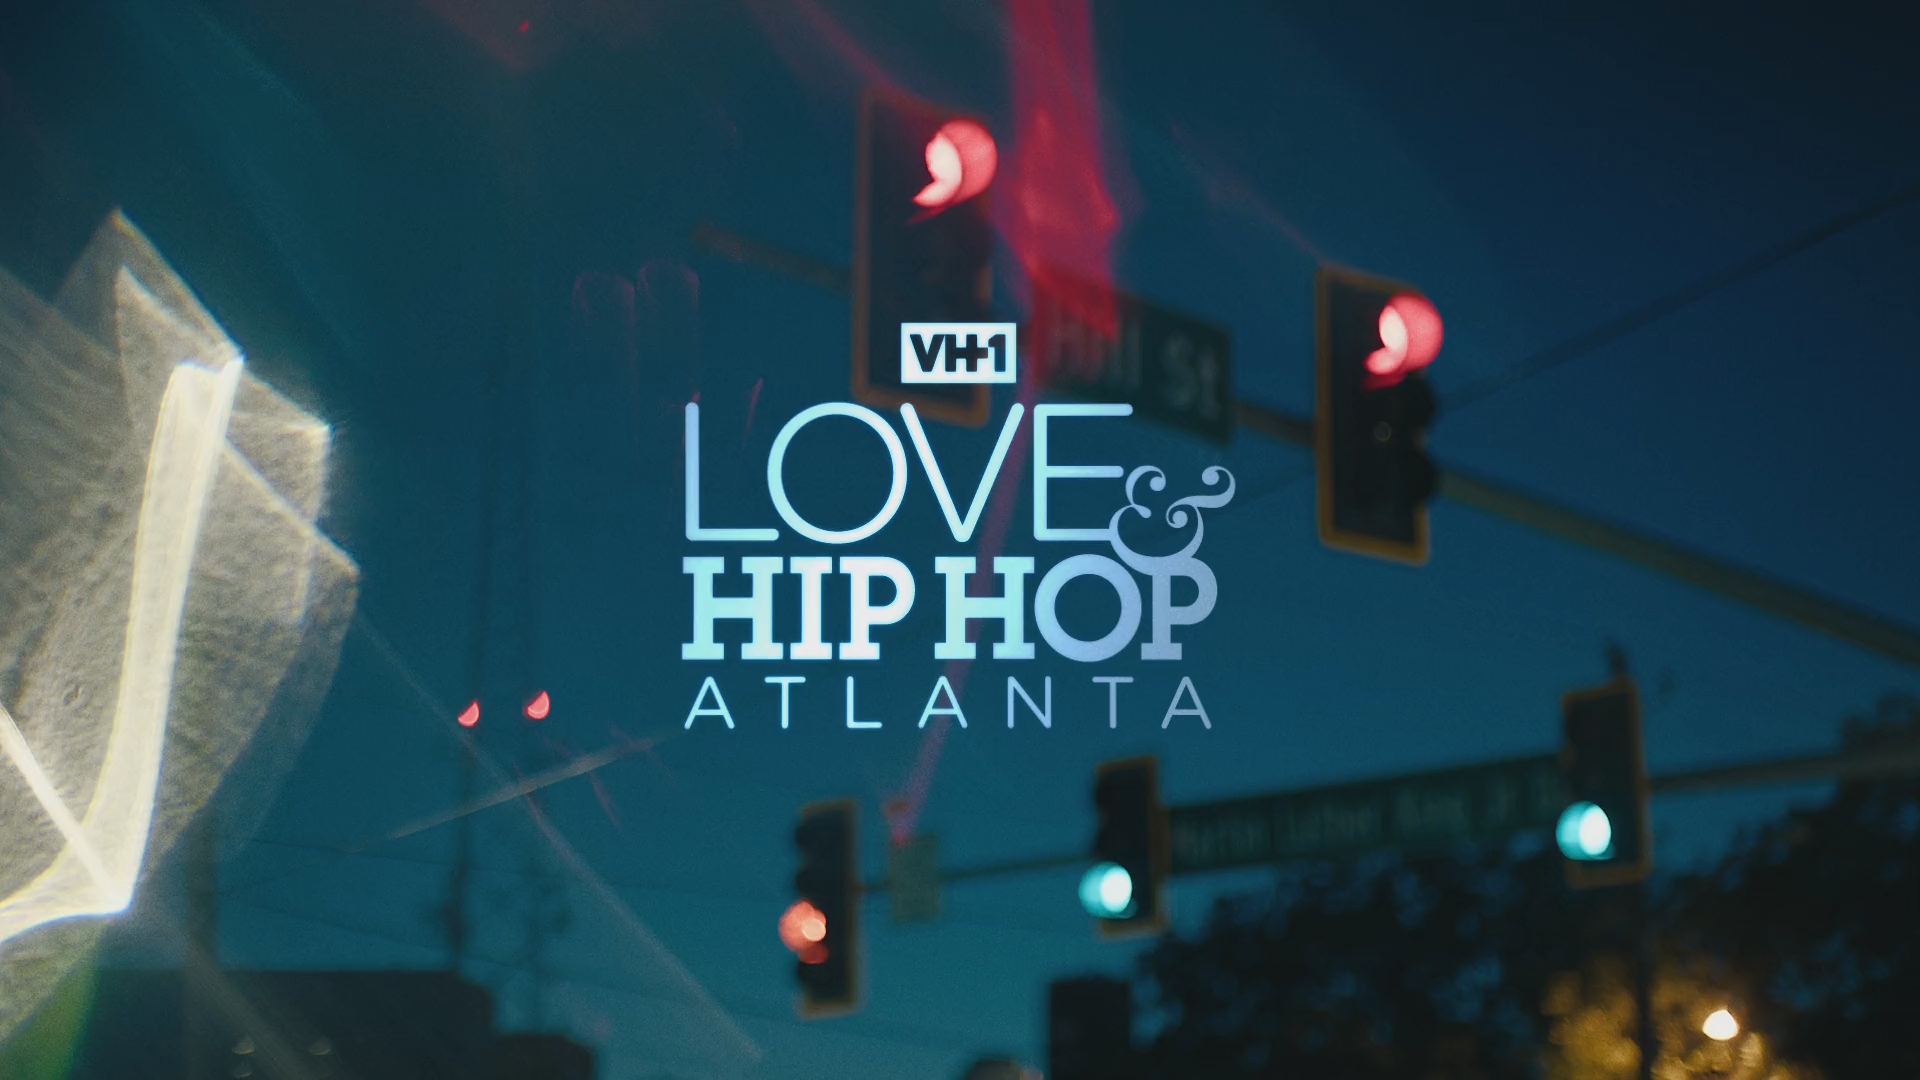 Love & Hip Hop: Atlanta Wallpapers